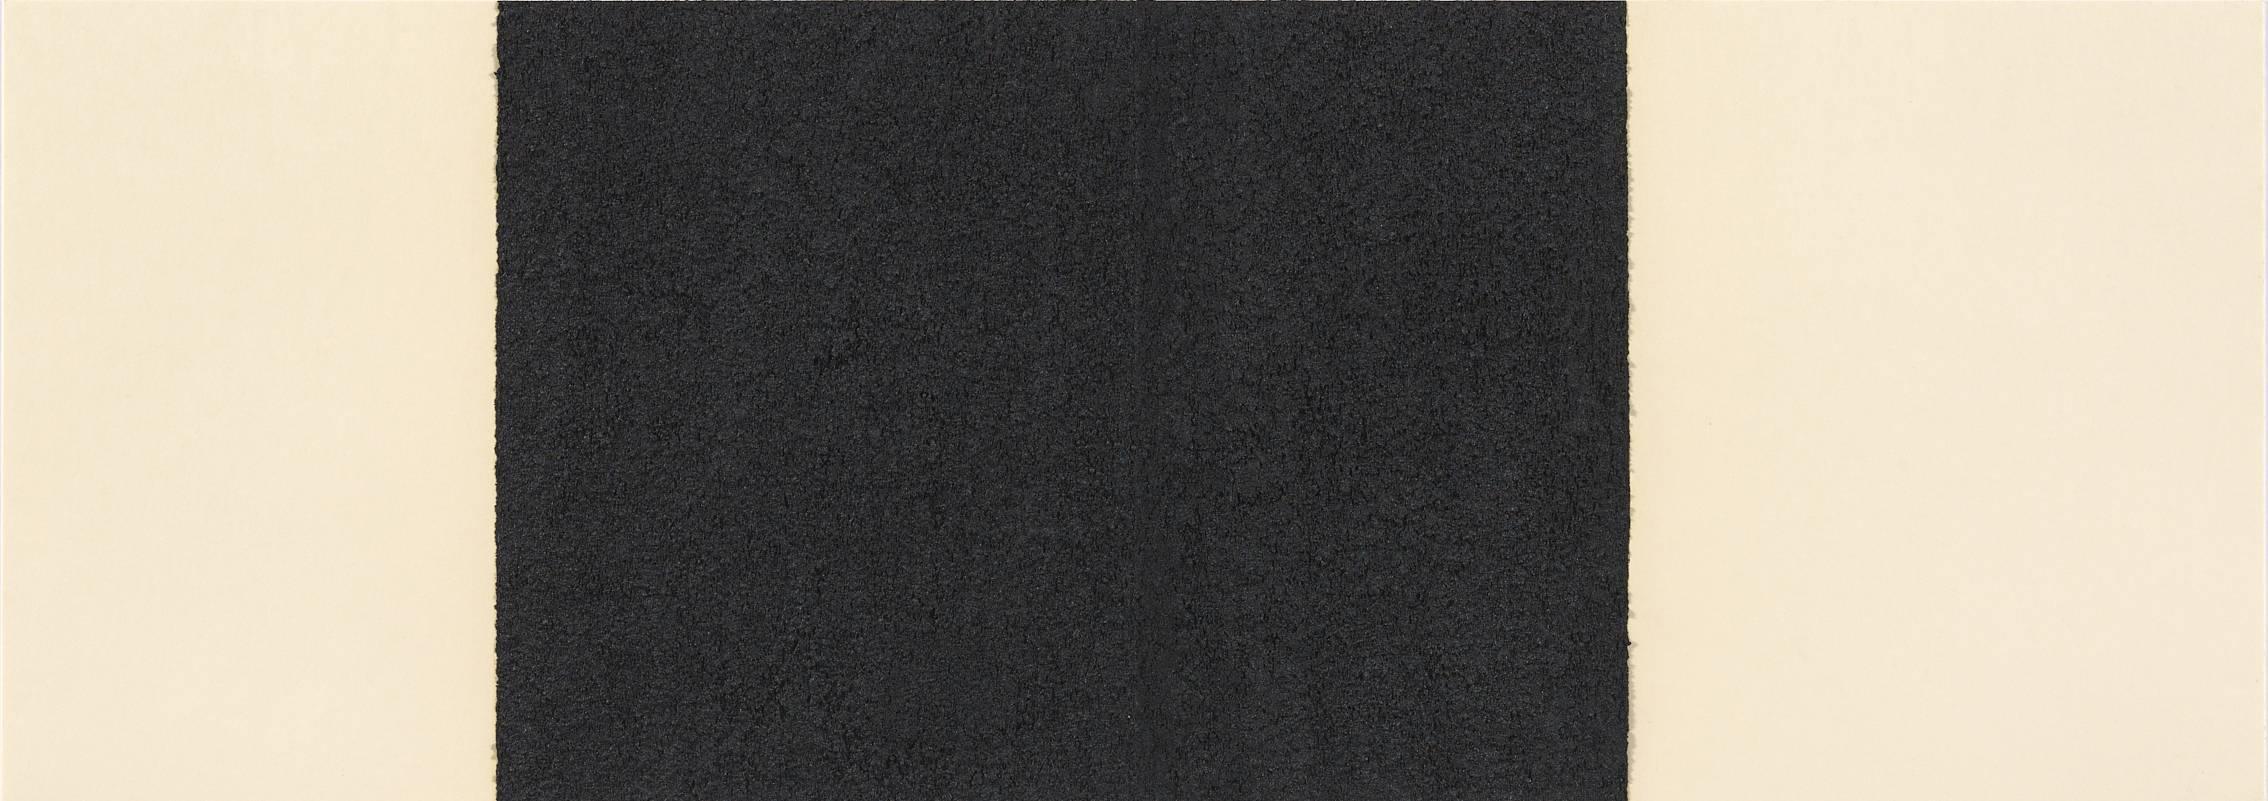 Richard Serra Abstract Print - Horizontal Reversal IV